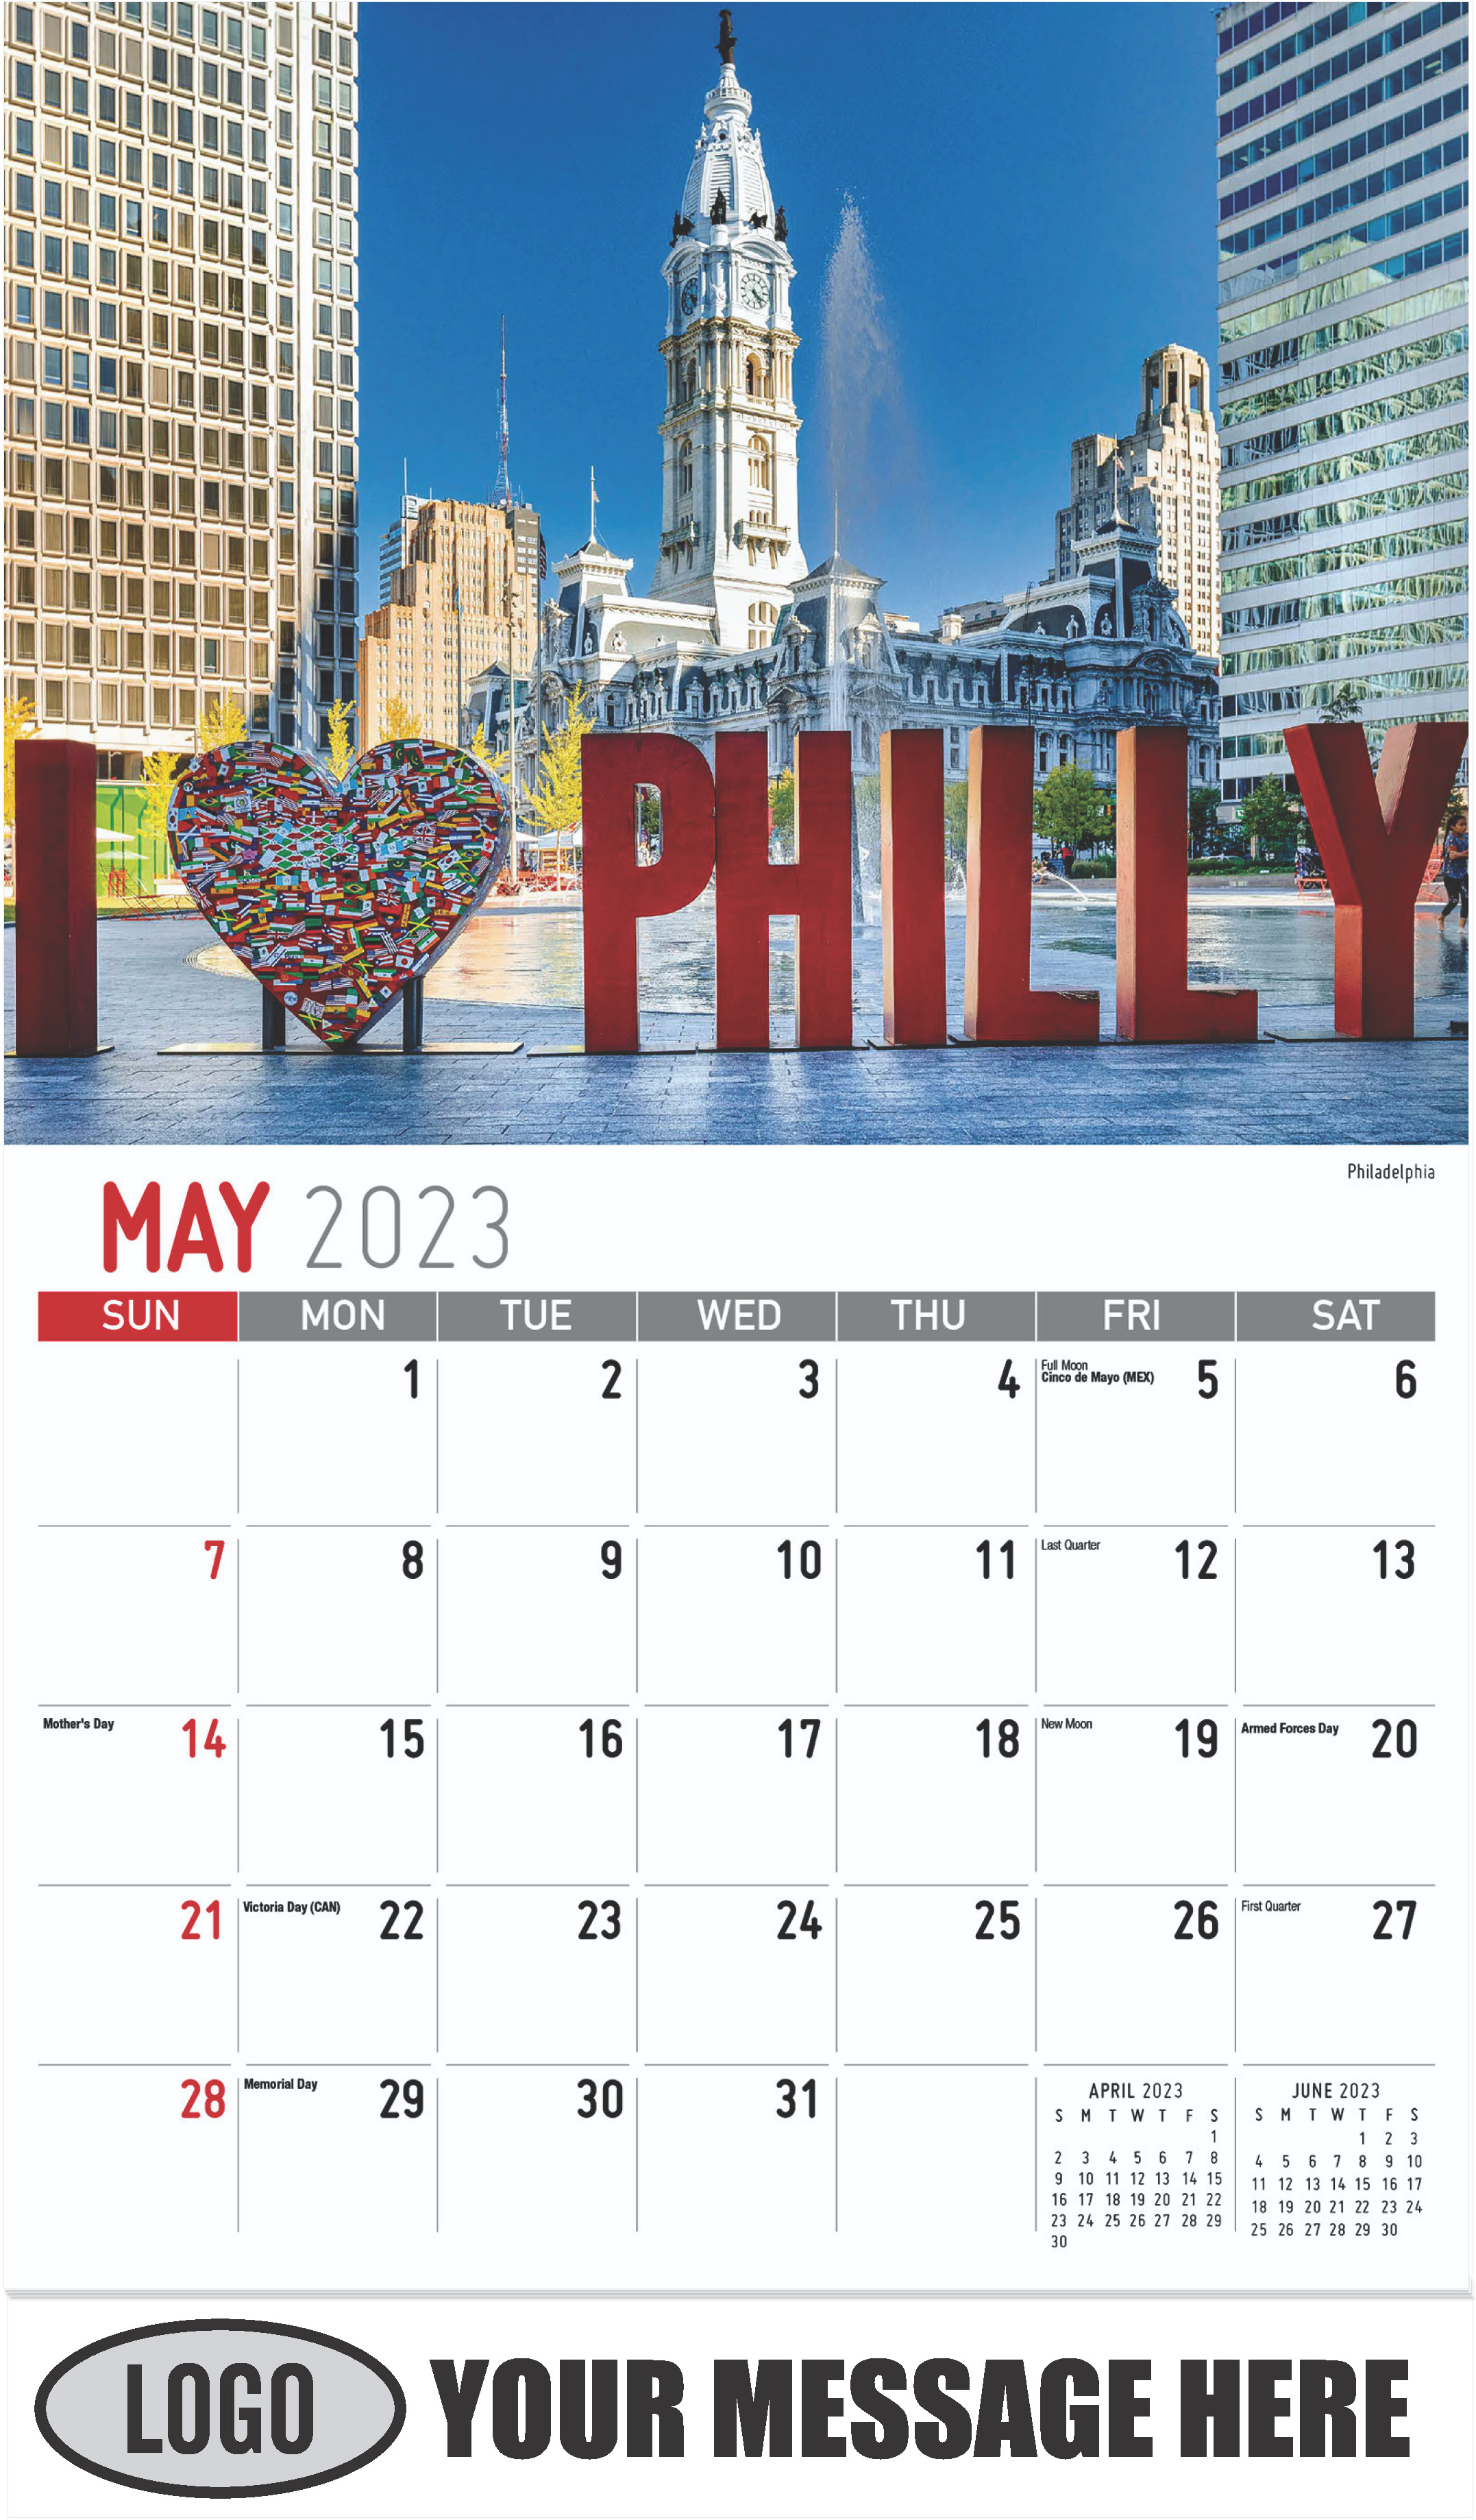 Philadelphia - May - Scenes of Pennsylvania 2023 Promotional Calendar